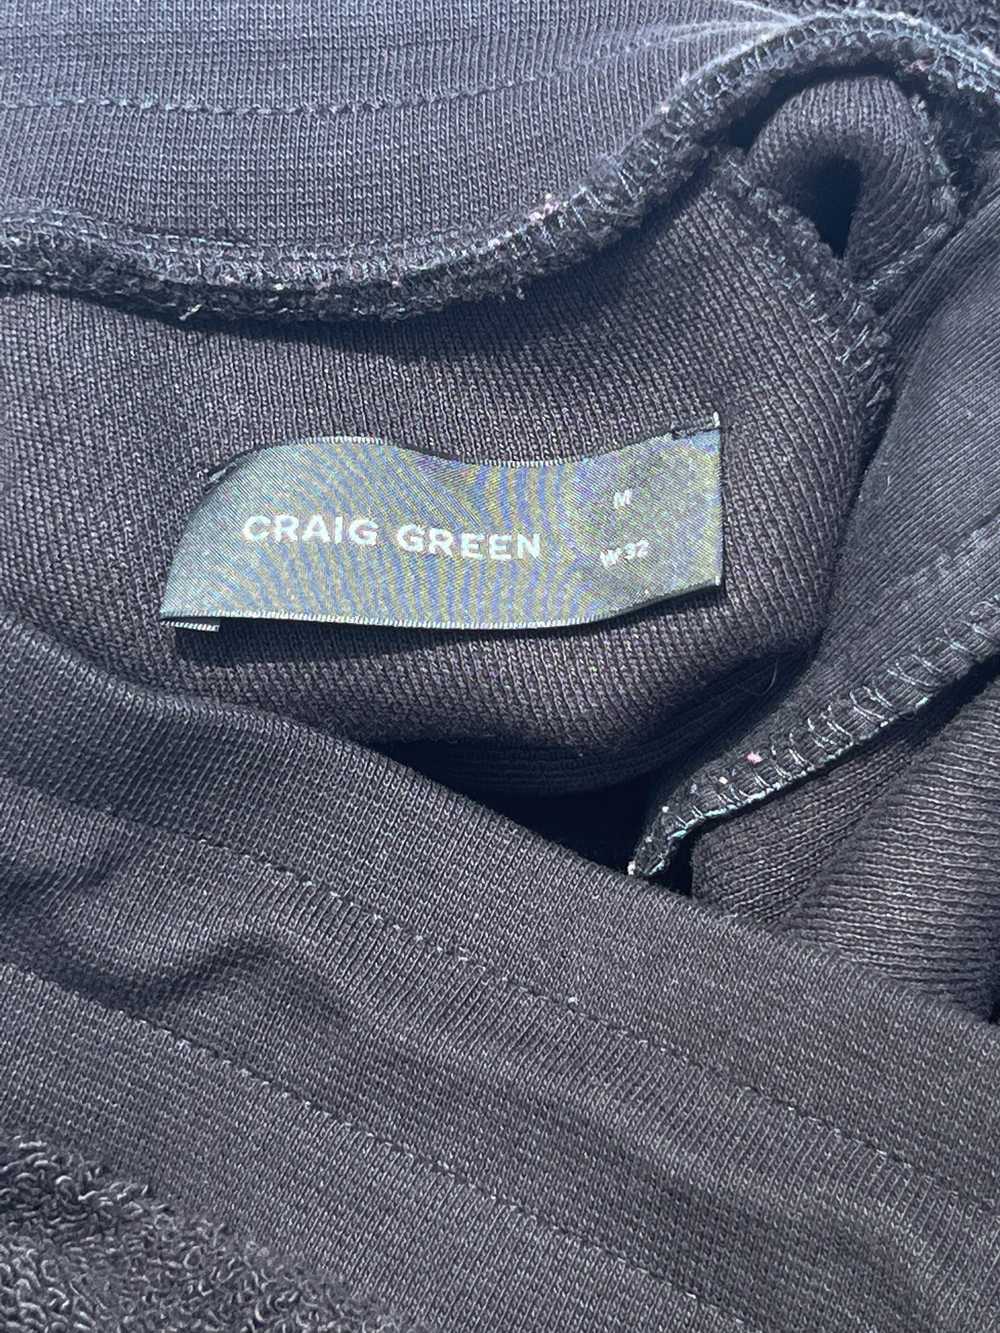 Craig Green Craig Green Laced Sweatpants - image 3